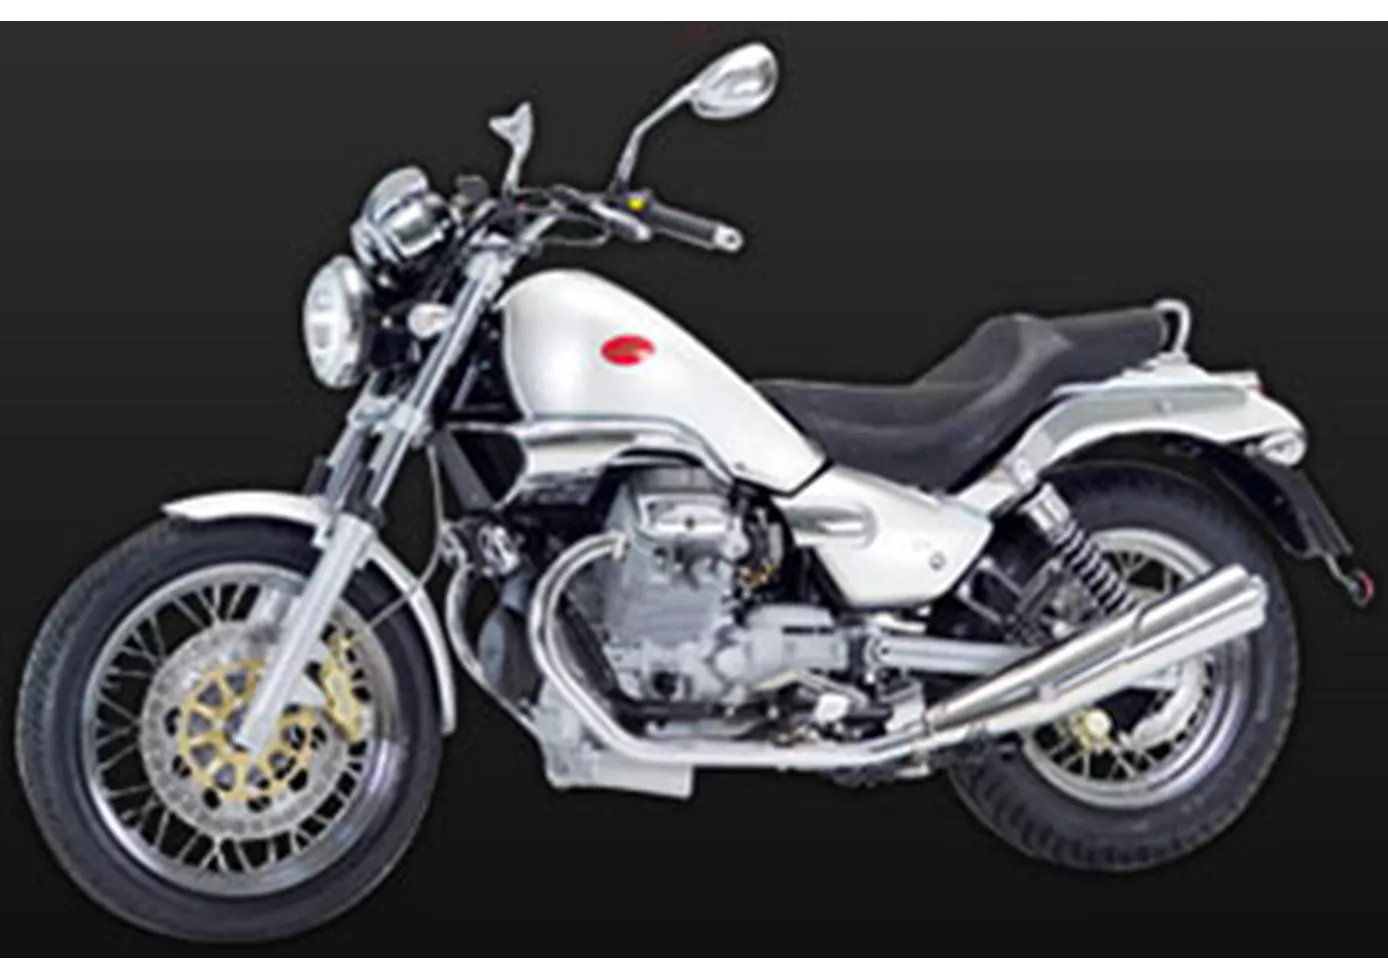 Moto Guzzi Nevada 750 Classic 2011